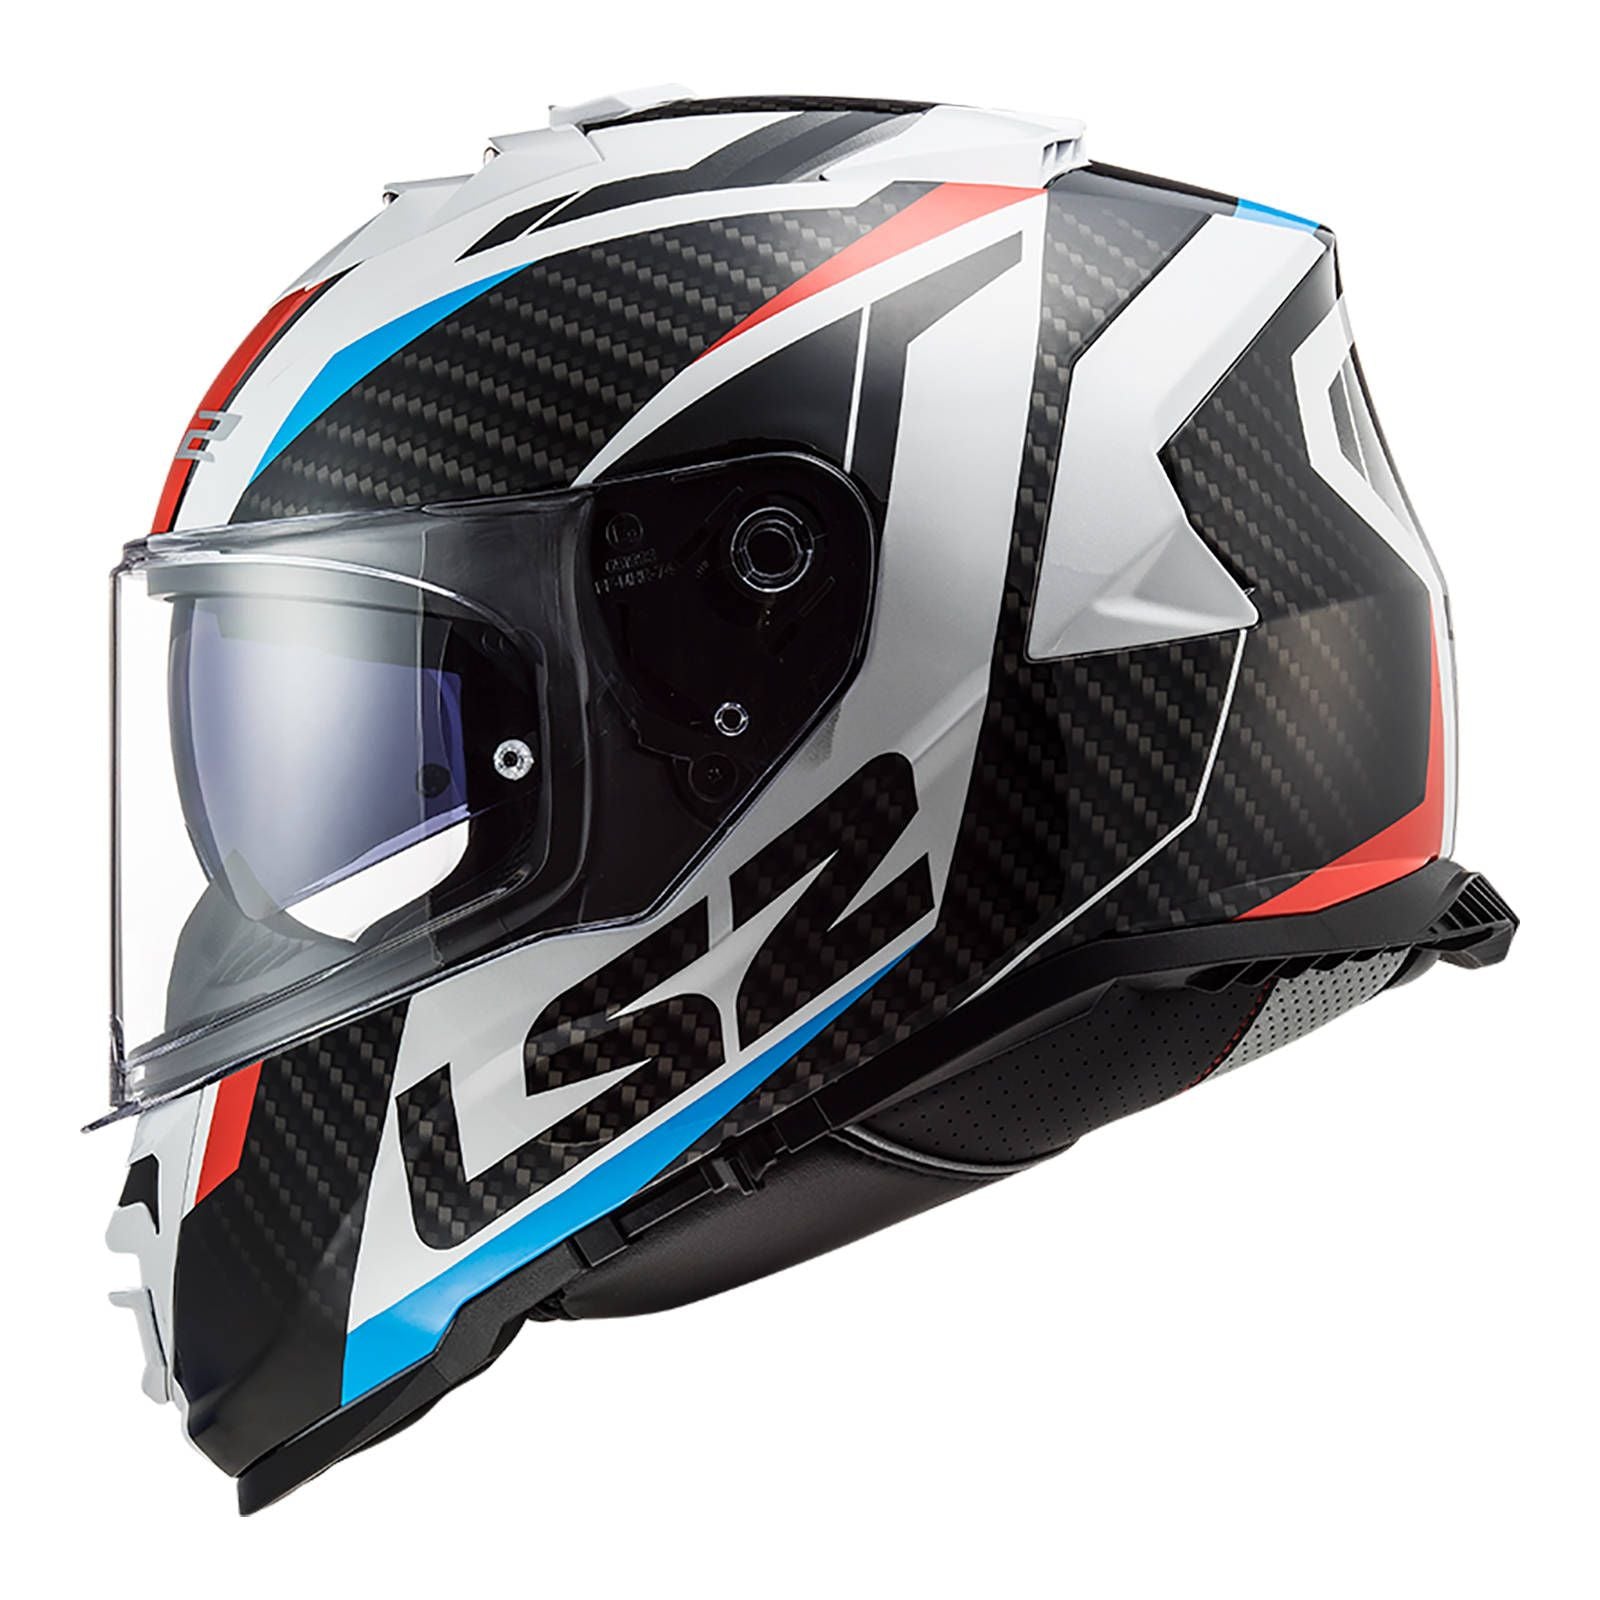 New LS2 FF800 Storm Racer Helmet - White / Blue / Red (M) #LS2FF800RACWBRM